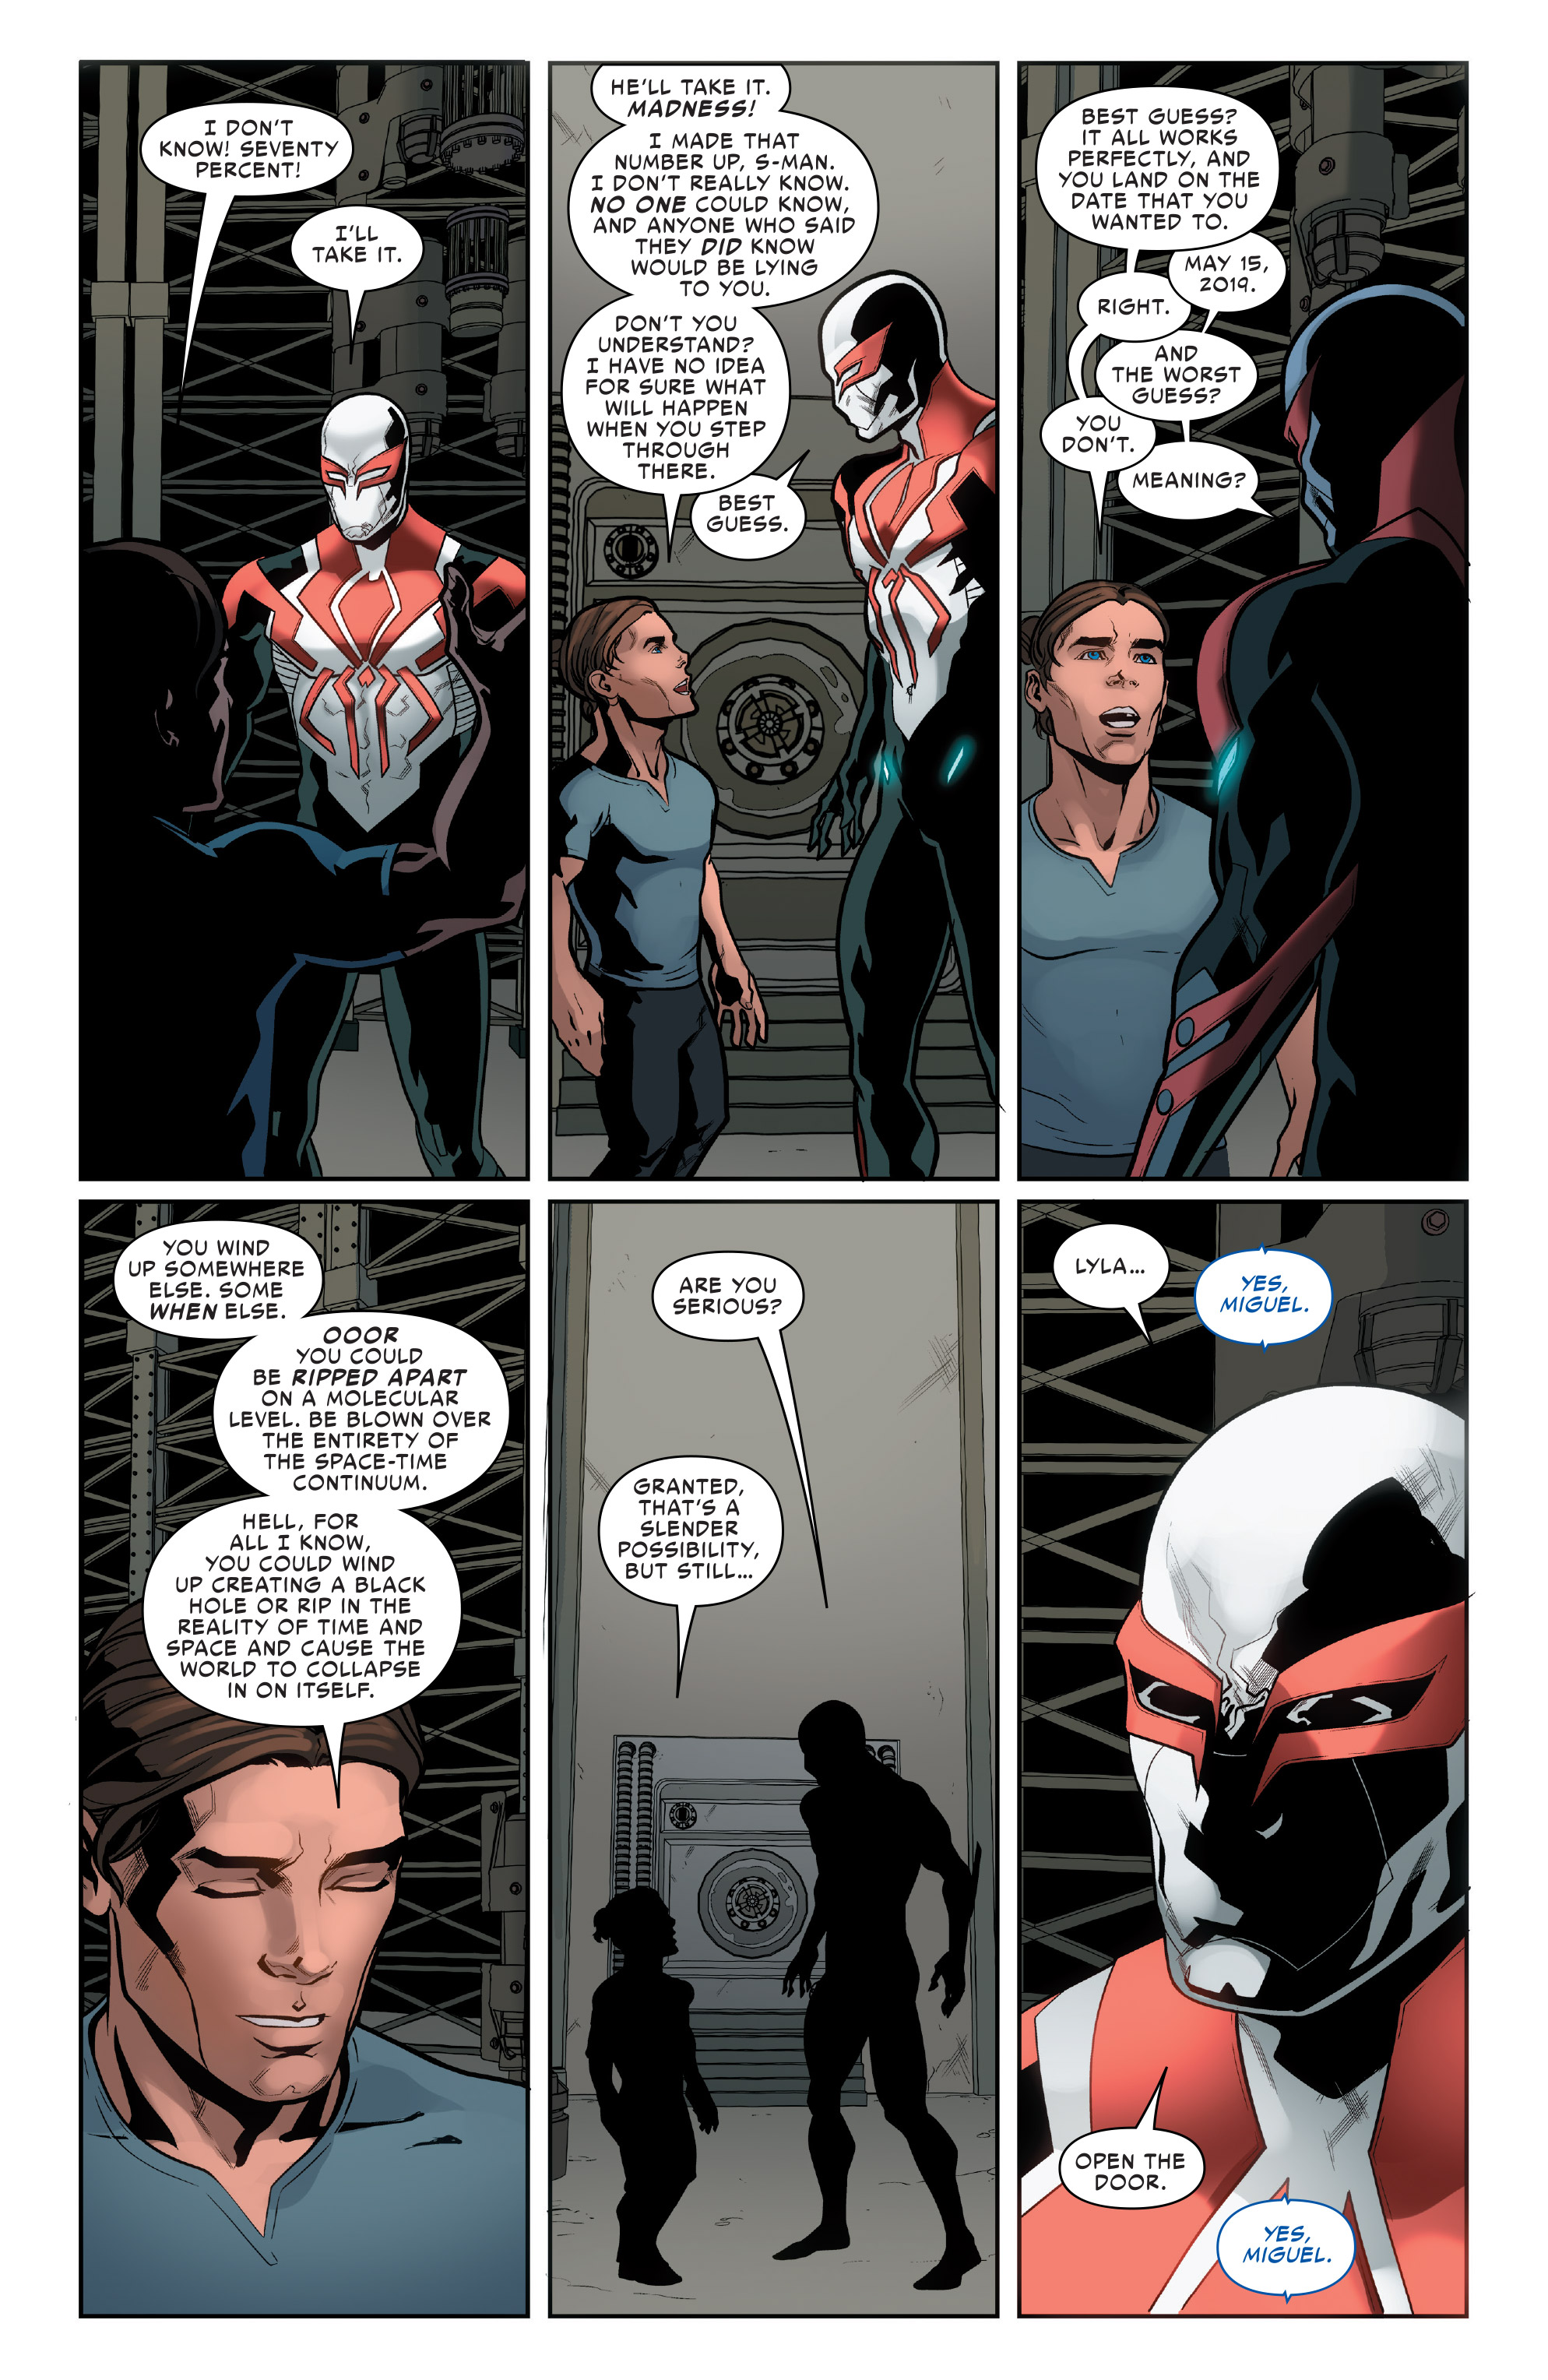 Spider-Man 2099 #23  Marvel Comics CB19272